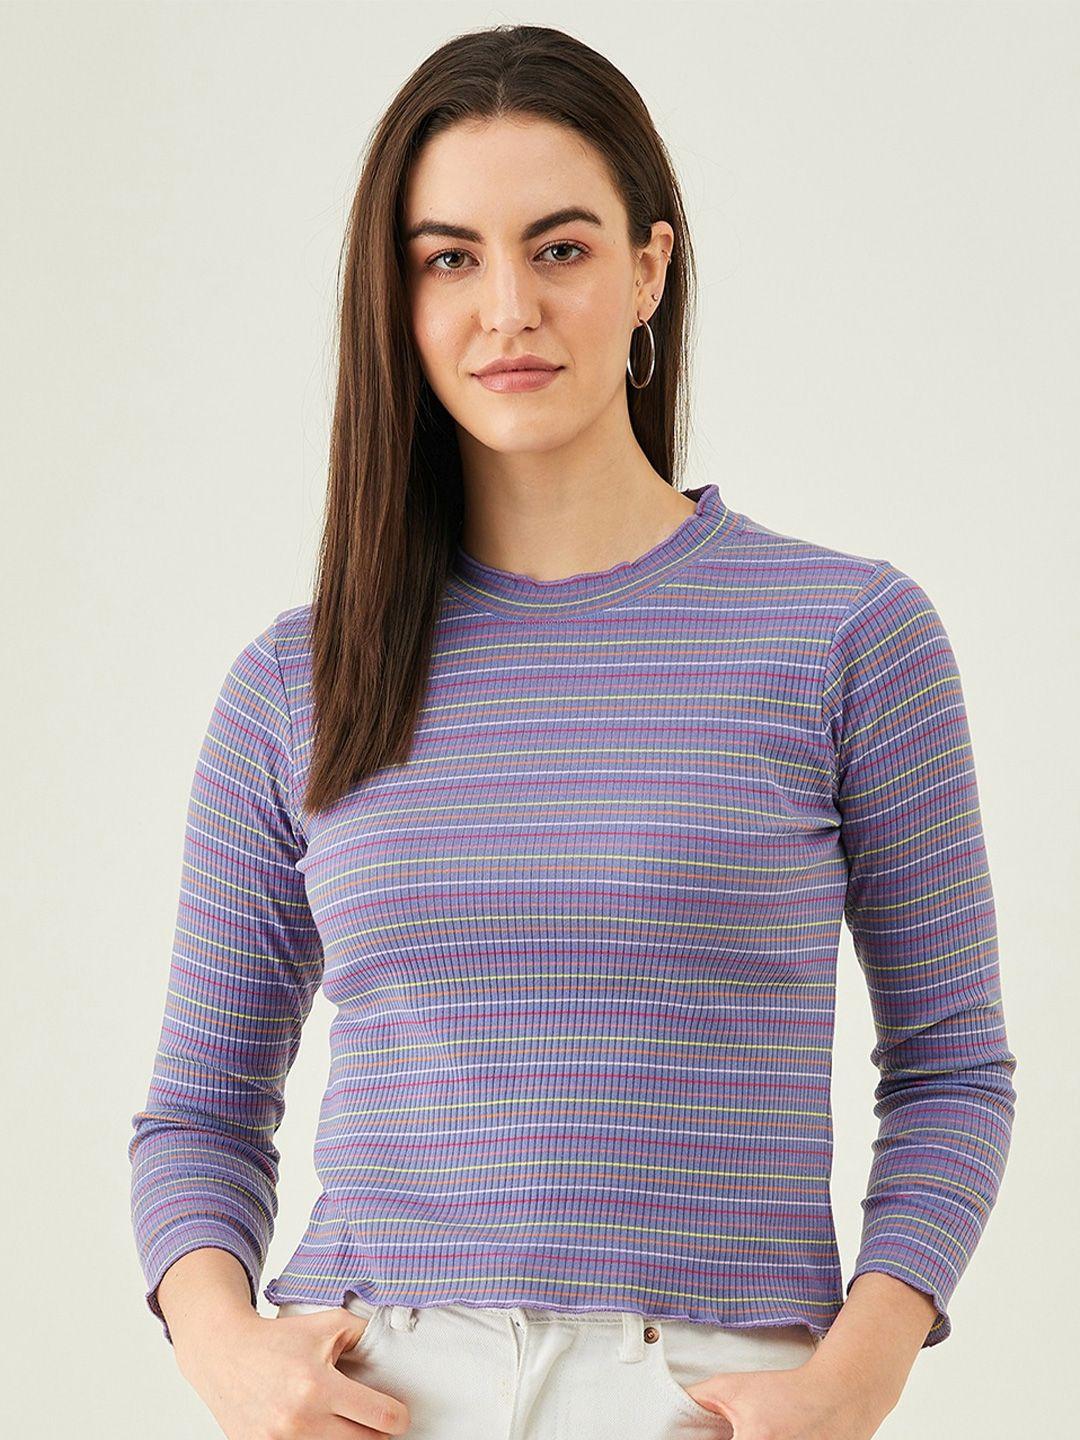 modeve lavender striped top